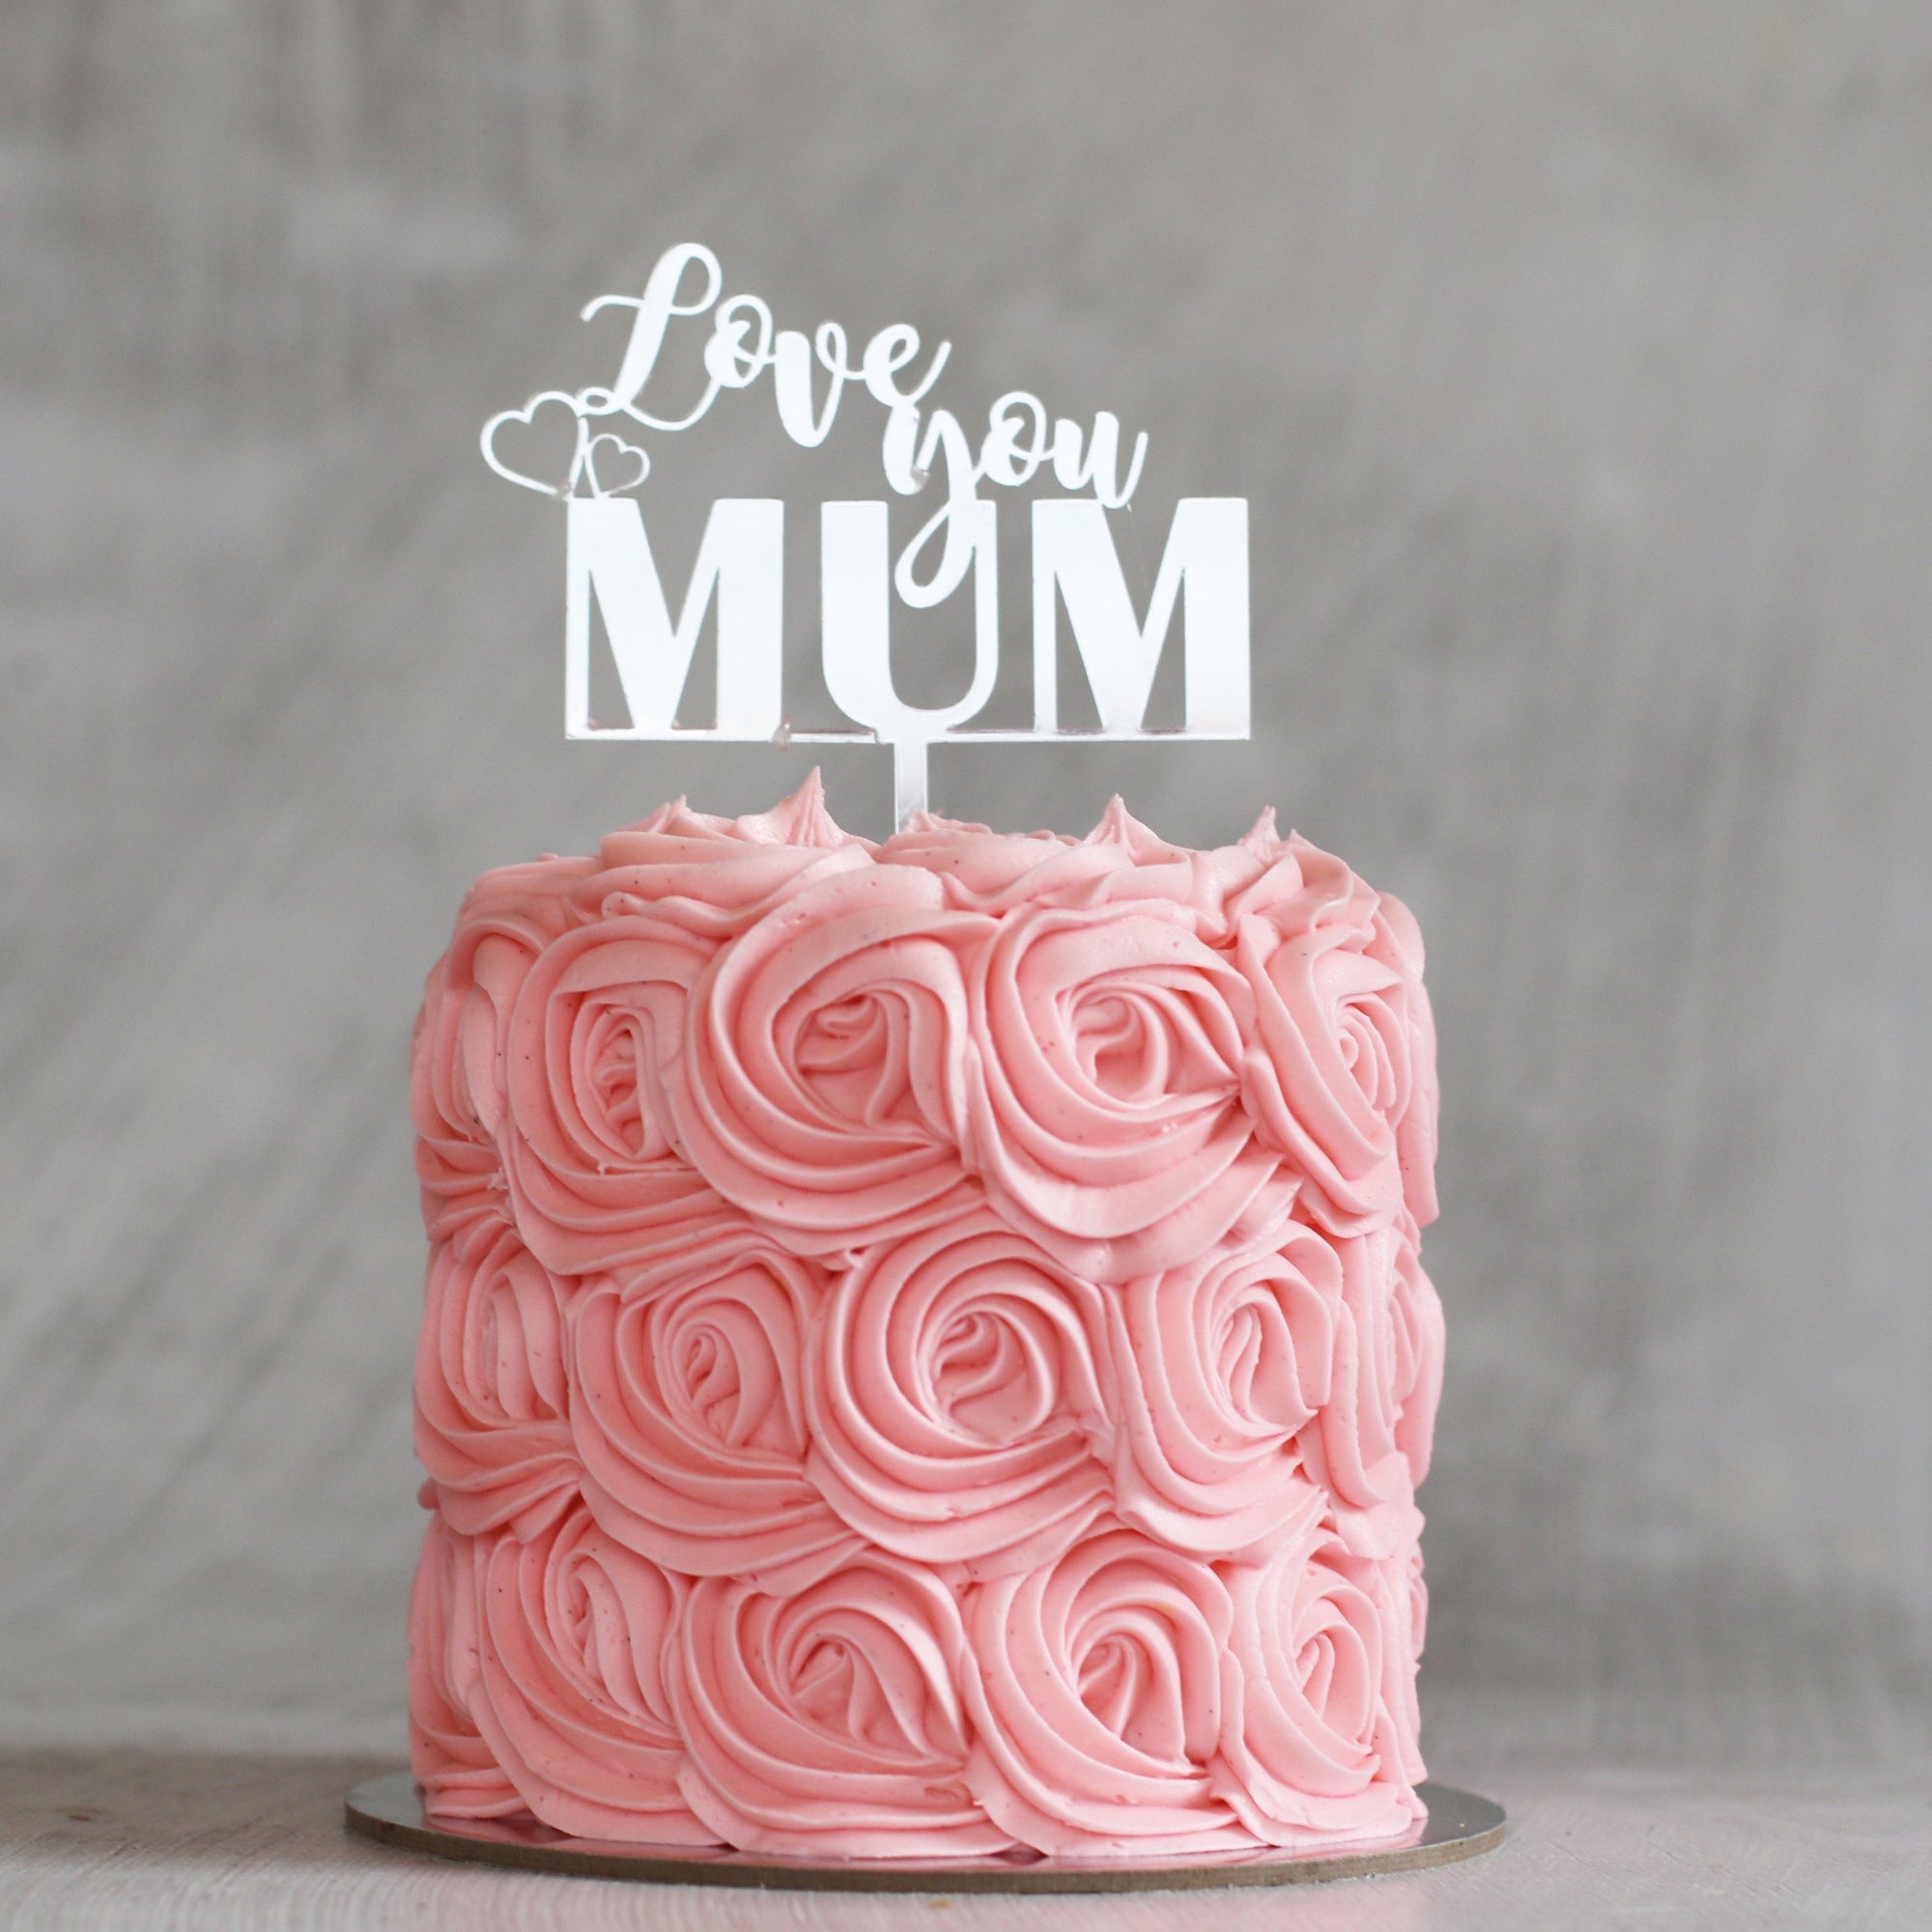 I Love You Mum Cake Cakes The Cupcake Queens 